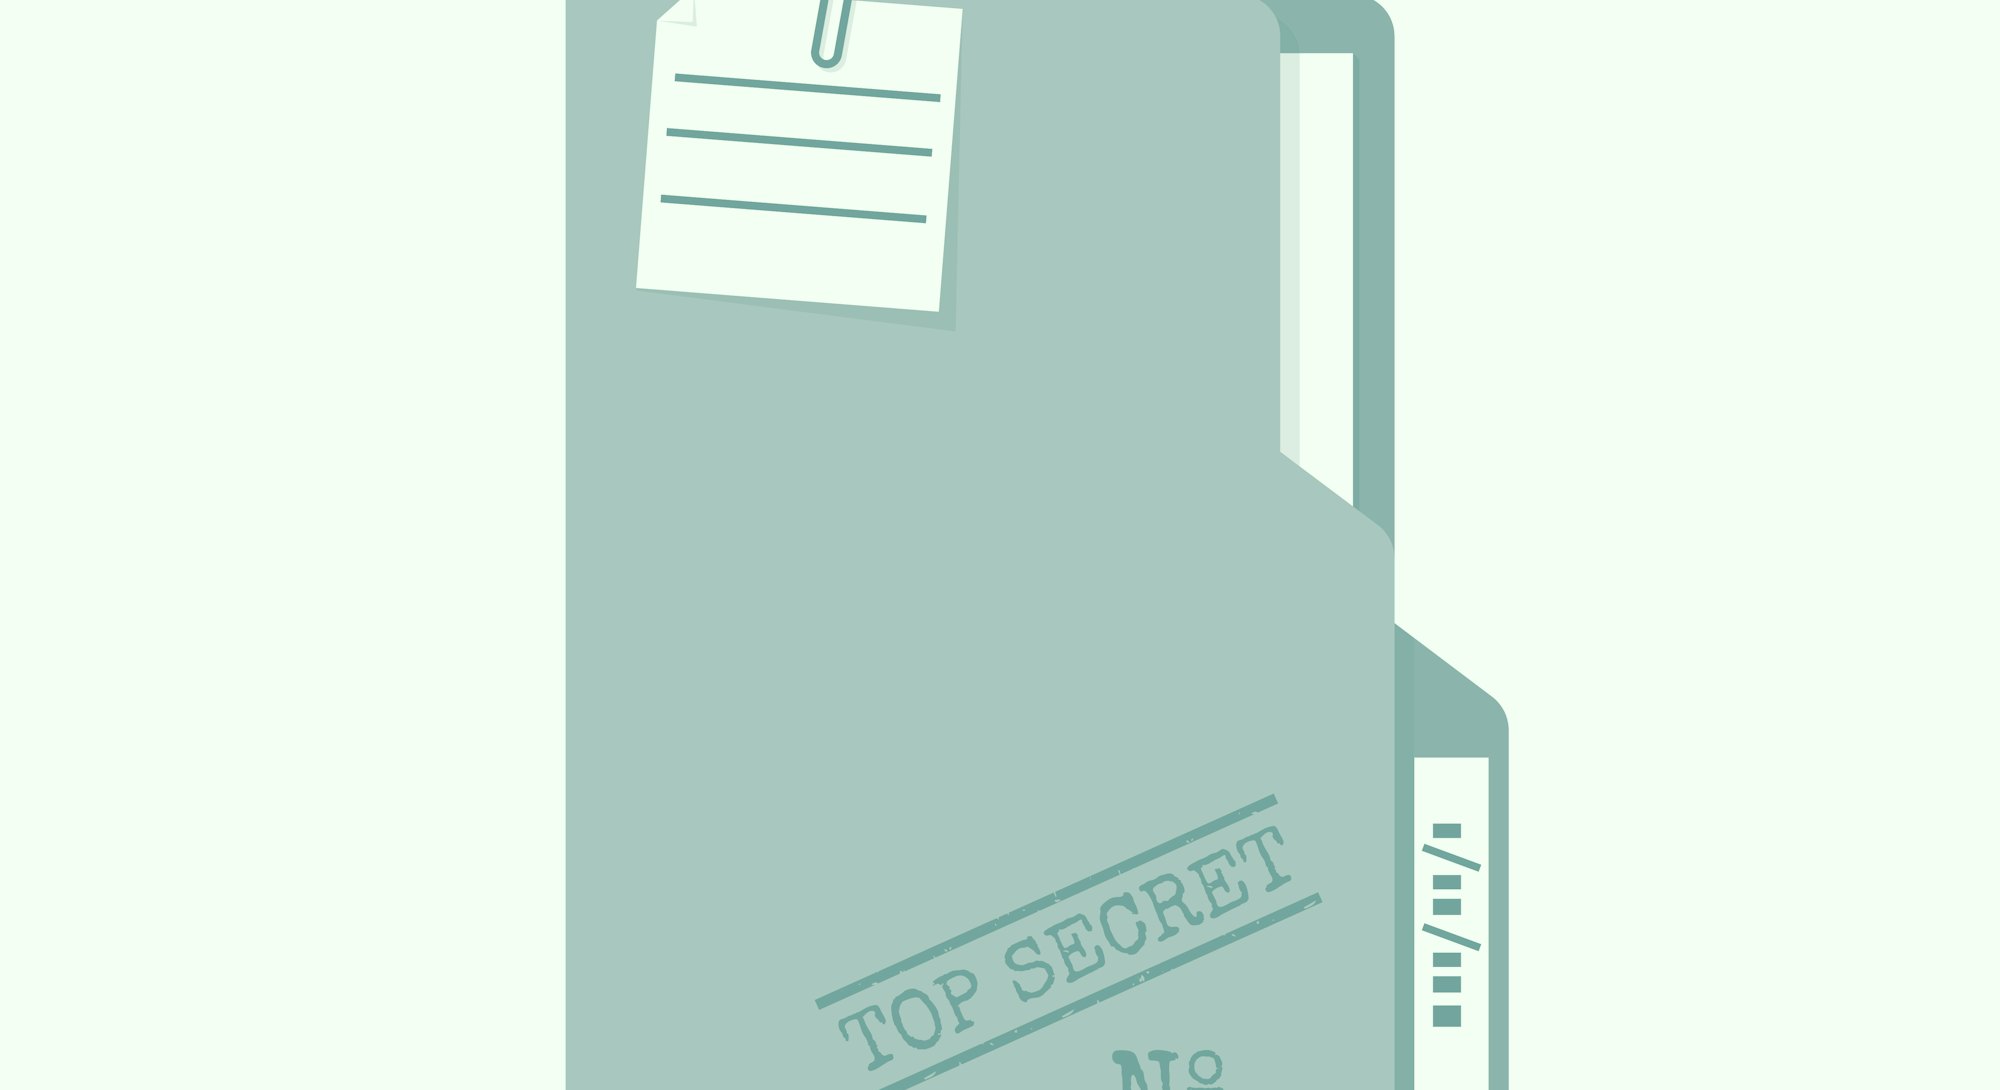 Top Secret folder. Vector illustration flat design. Isolated on white background. Documents confiden...